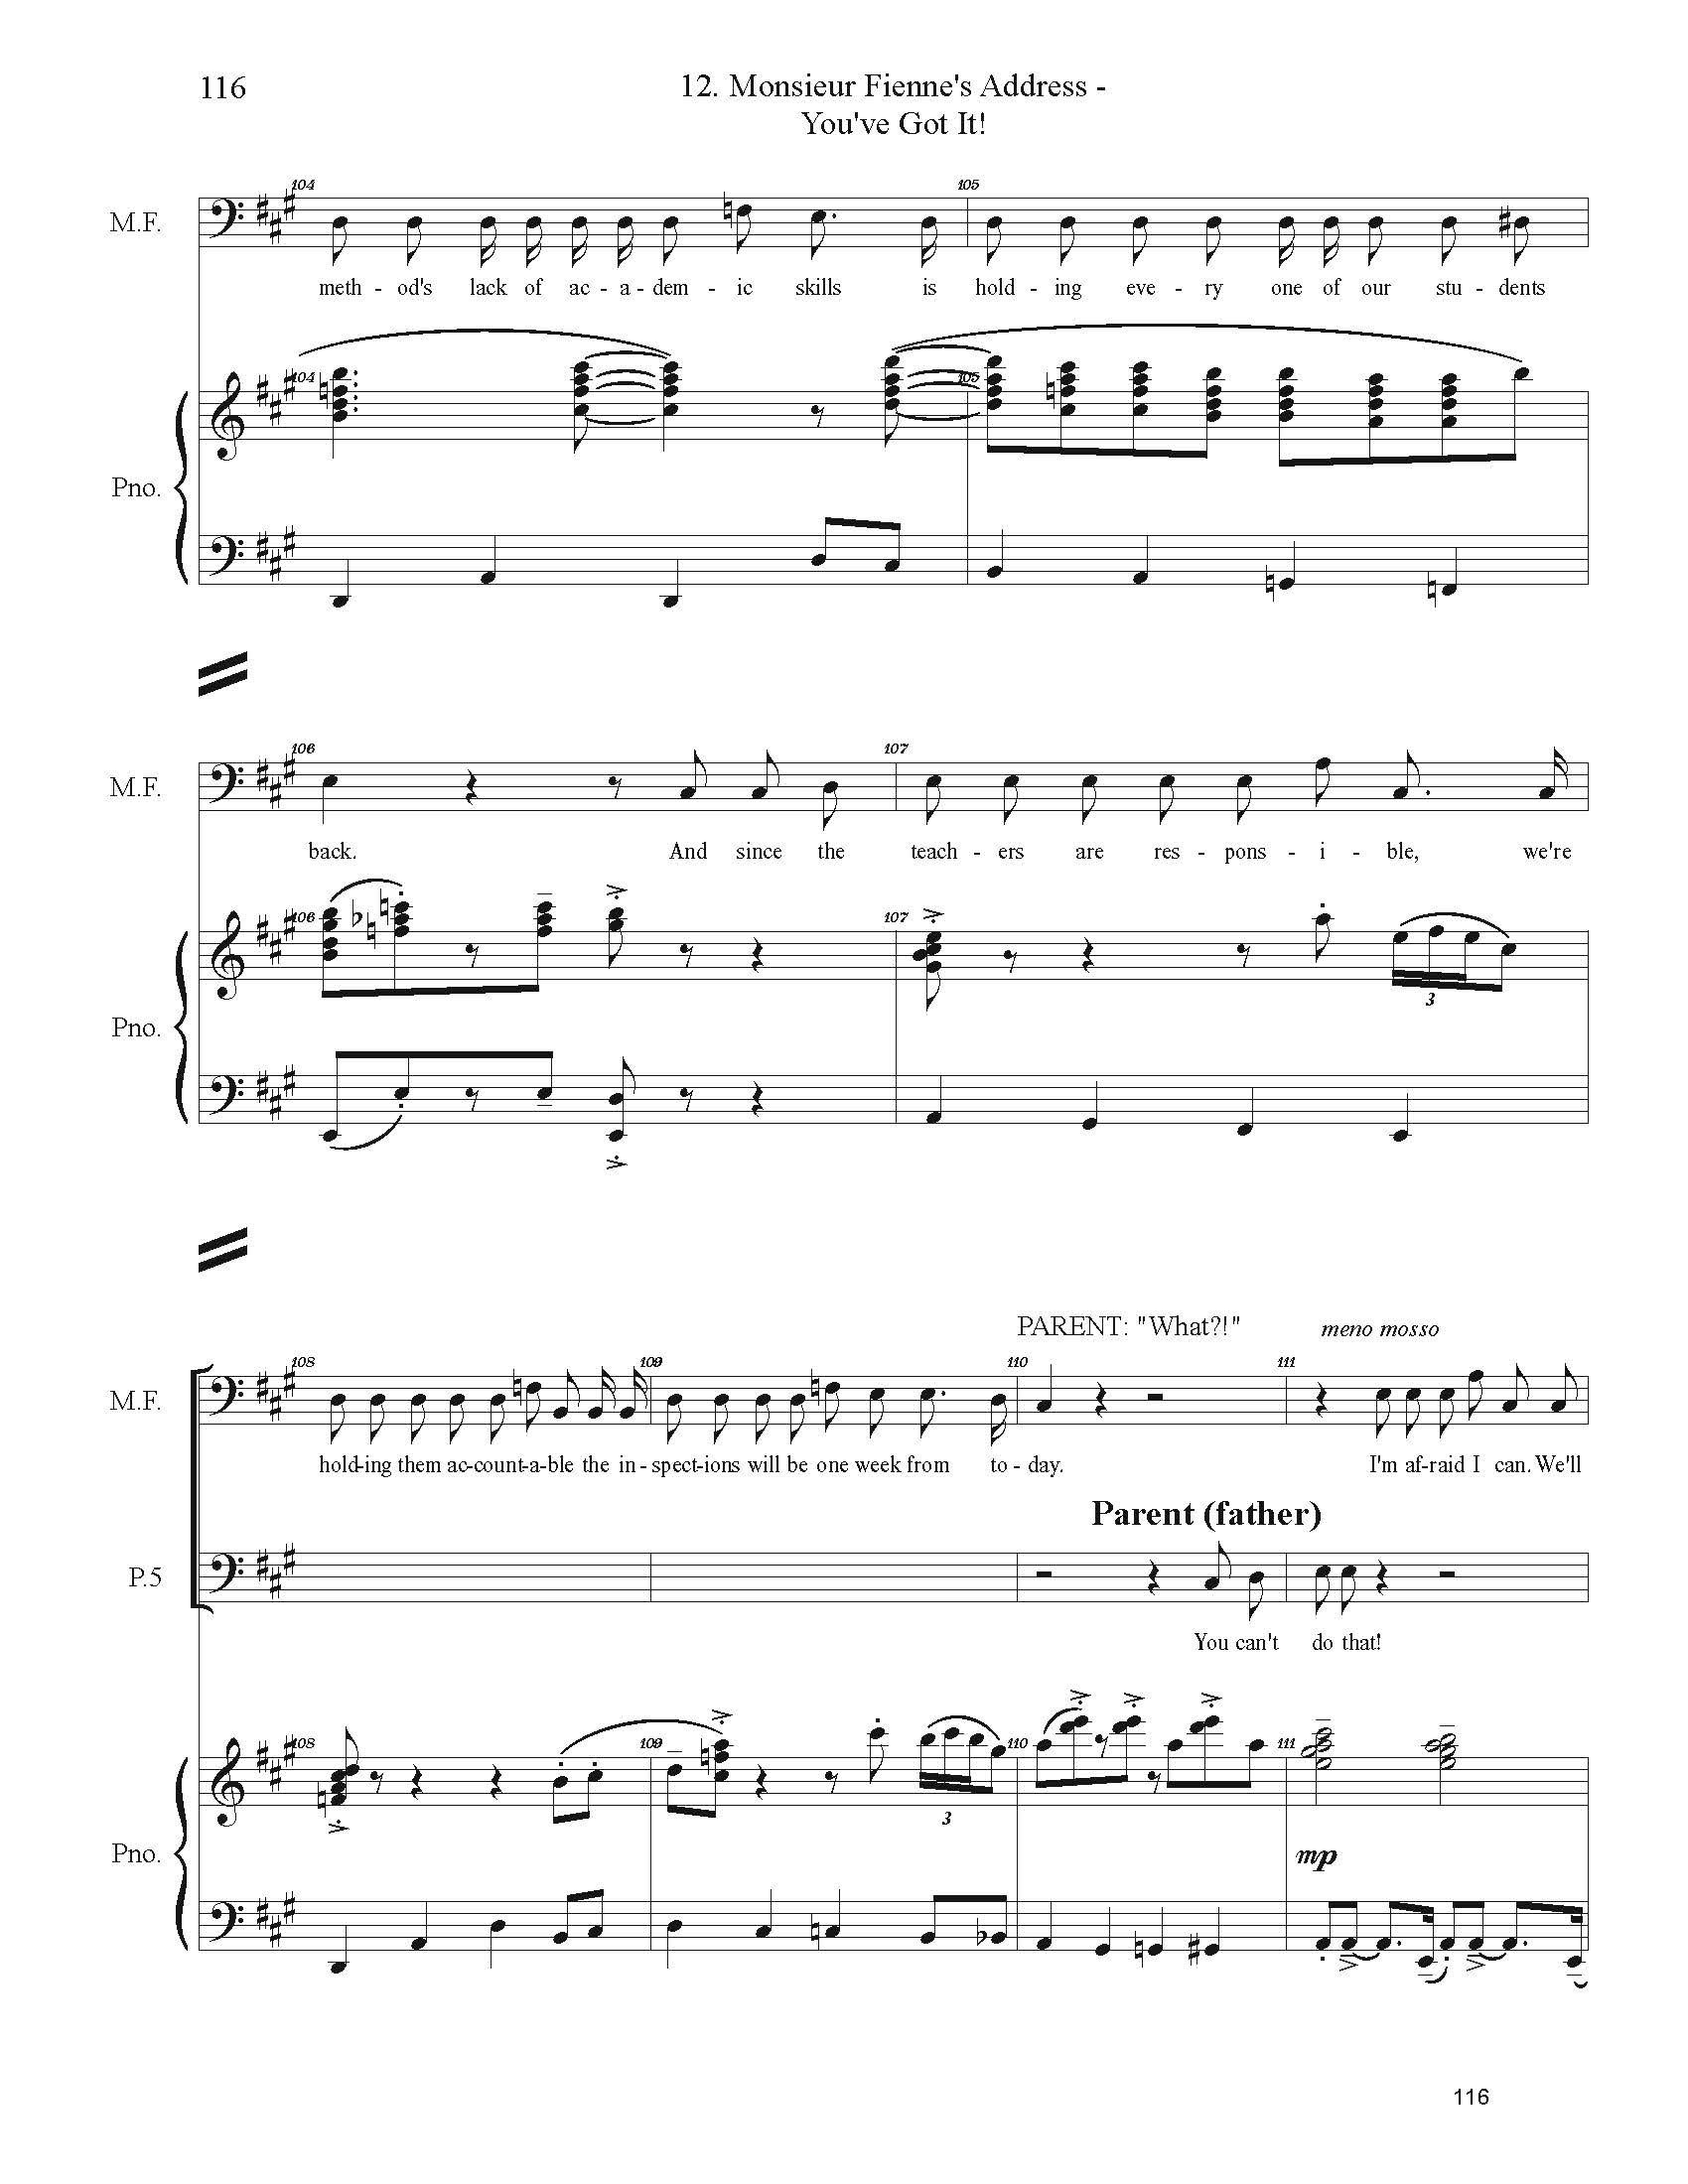 FULL PIANO VOCAL SCORE DRAFT 1 - Score_Page_116.jpg